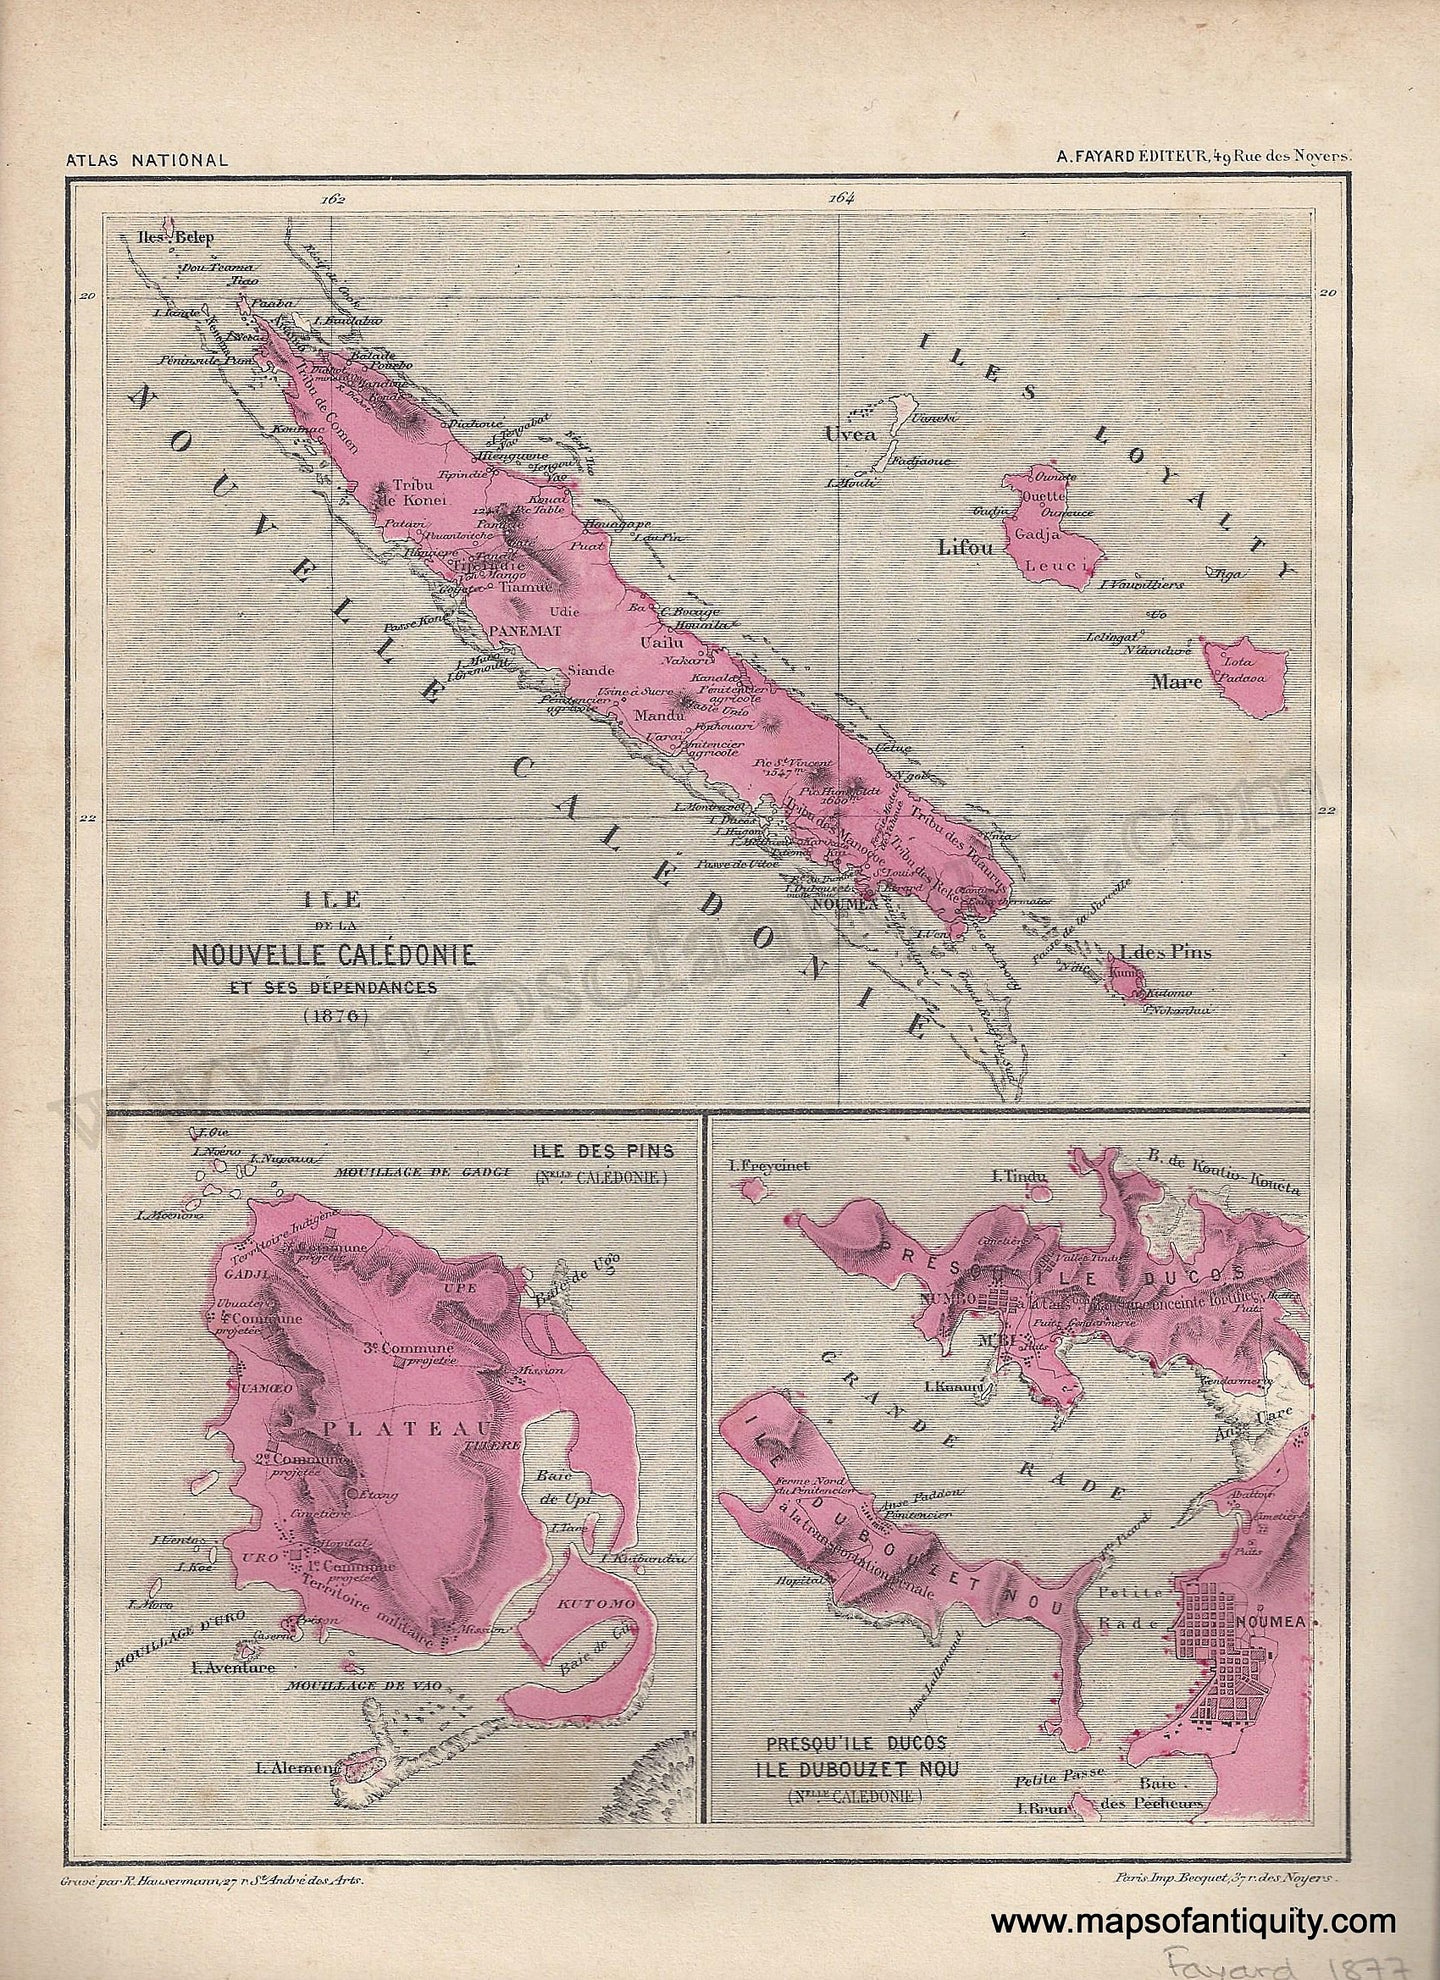 Antique-Hand-Colored-Map-Ile-de-la-Nouvelle-Caledonie-New-Caledonia-1877-Fayard-1800s-19th-century-Maps-of-Antiquity